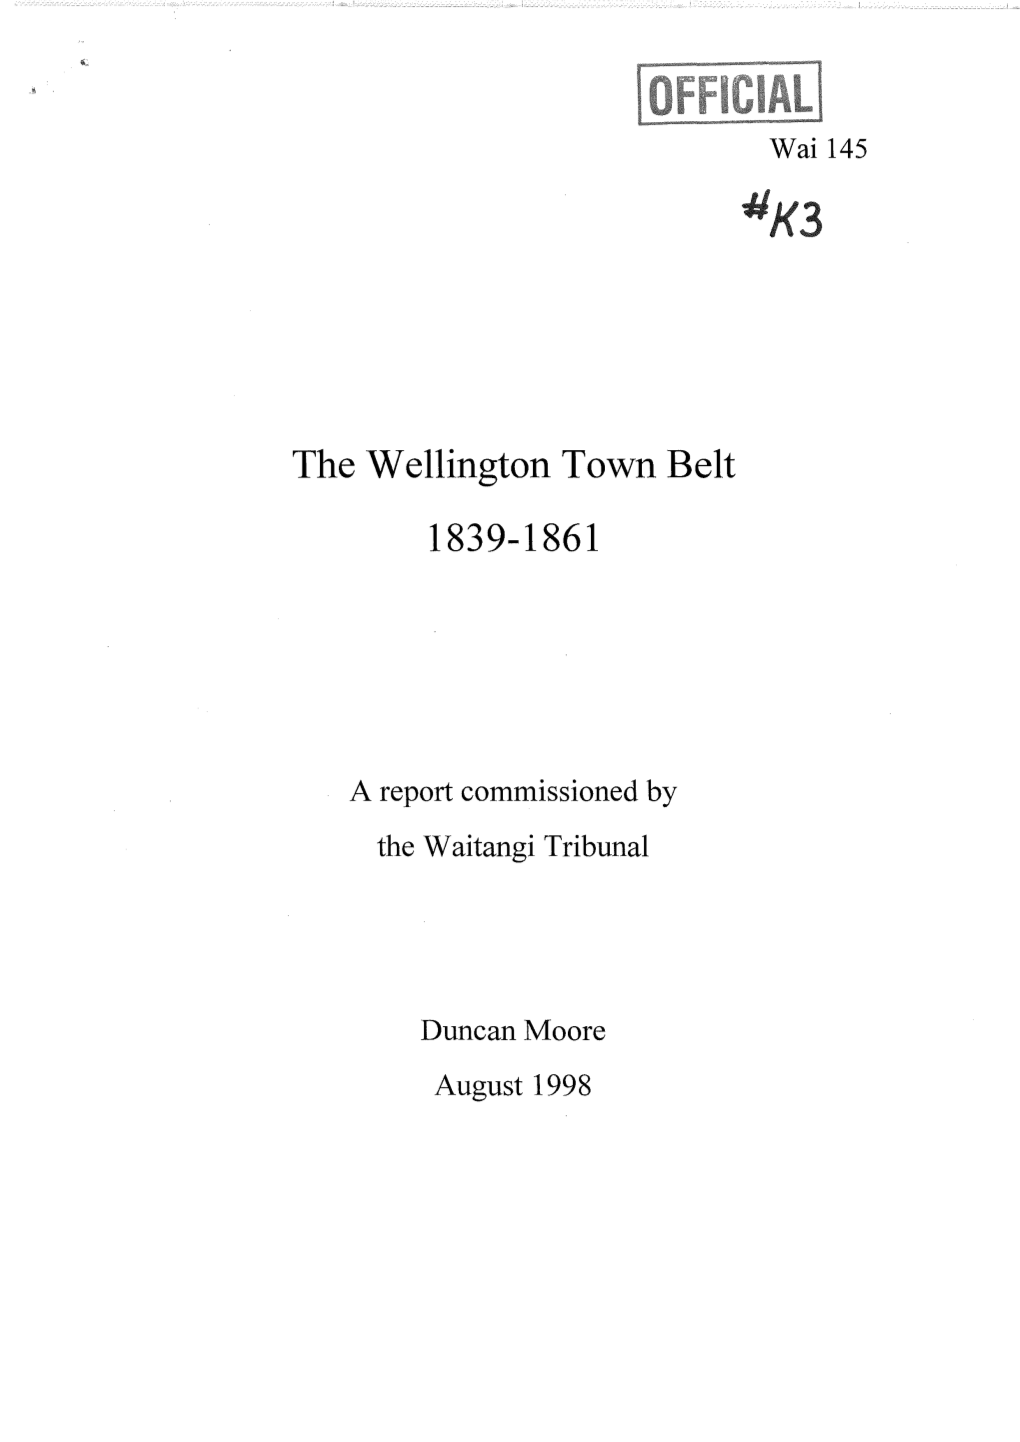 The Wellington Town Belt